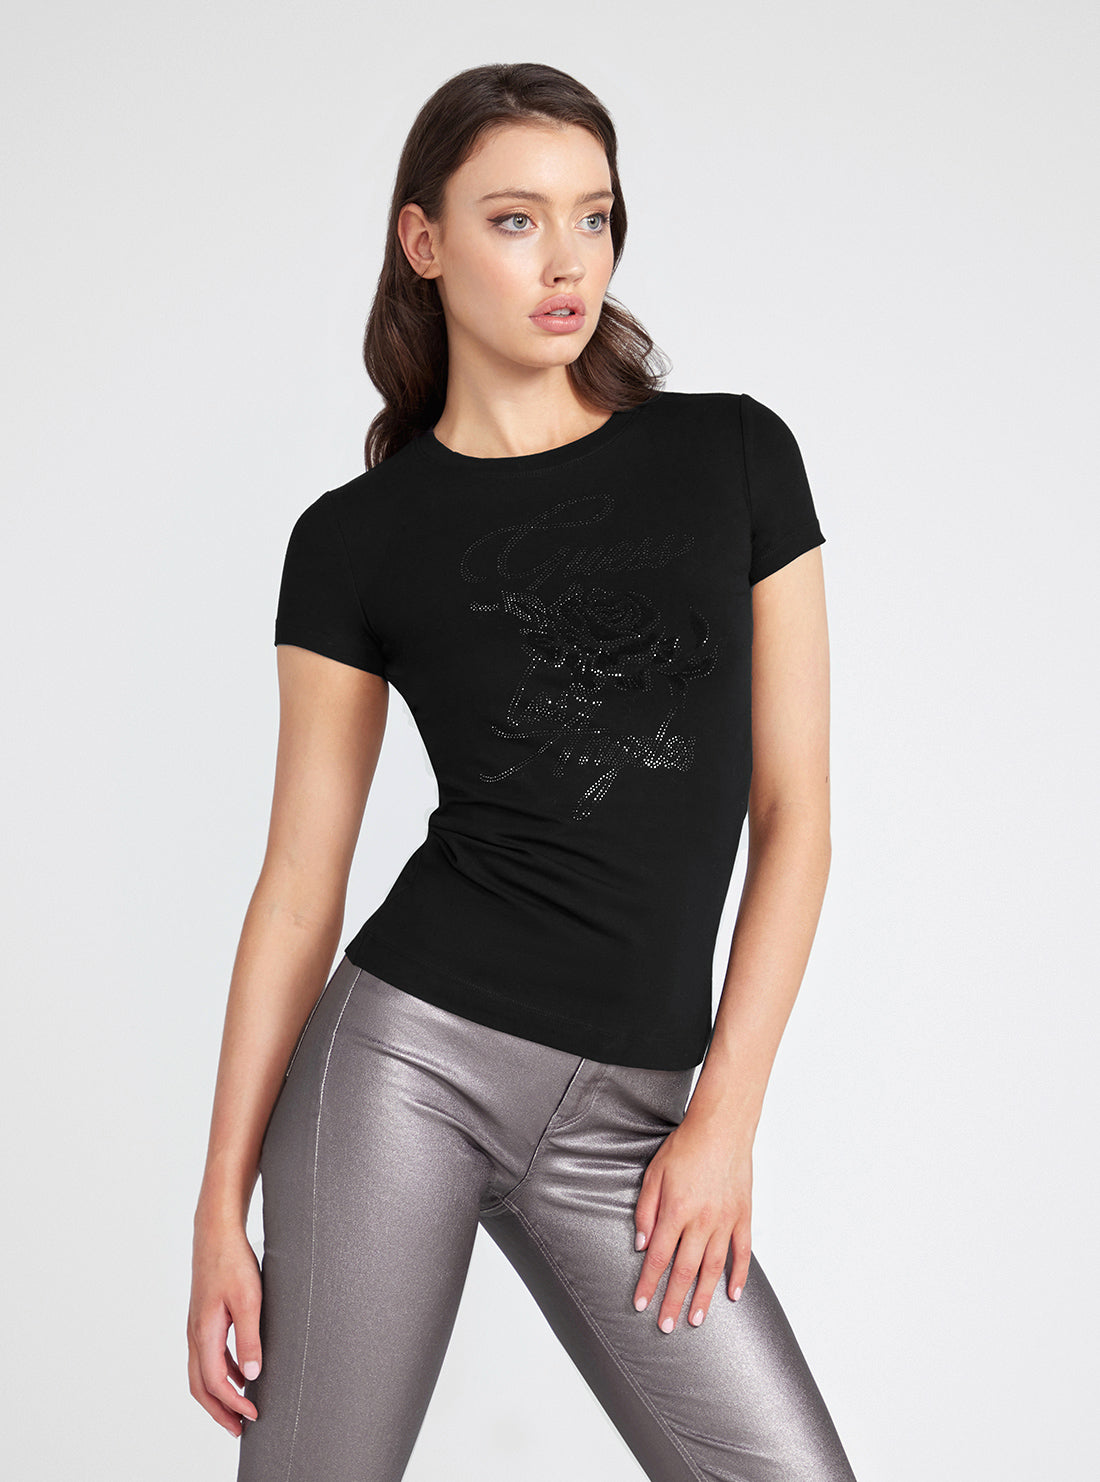 Black Rhinestone Rose T-Shirt | GUESS Women's Apparel | front view